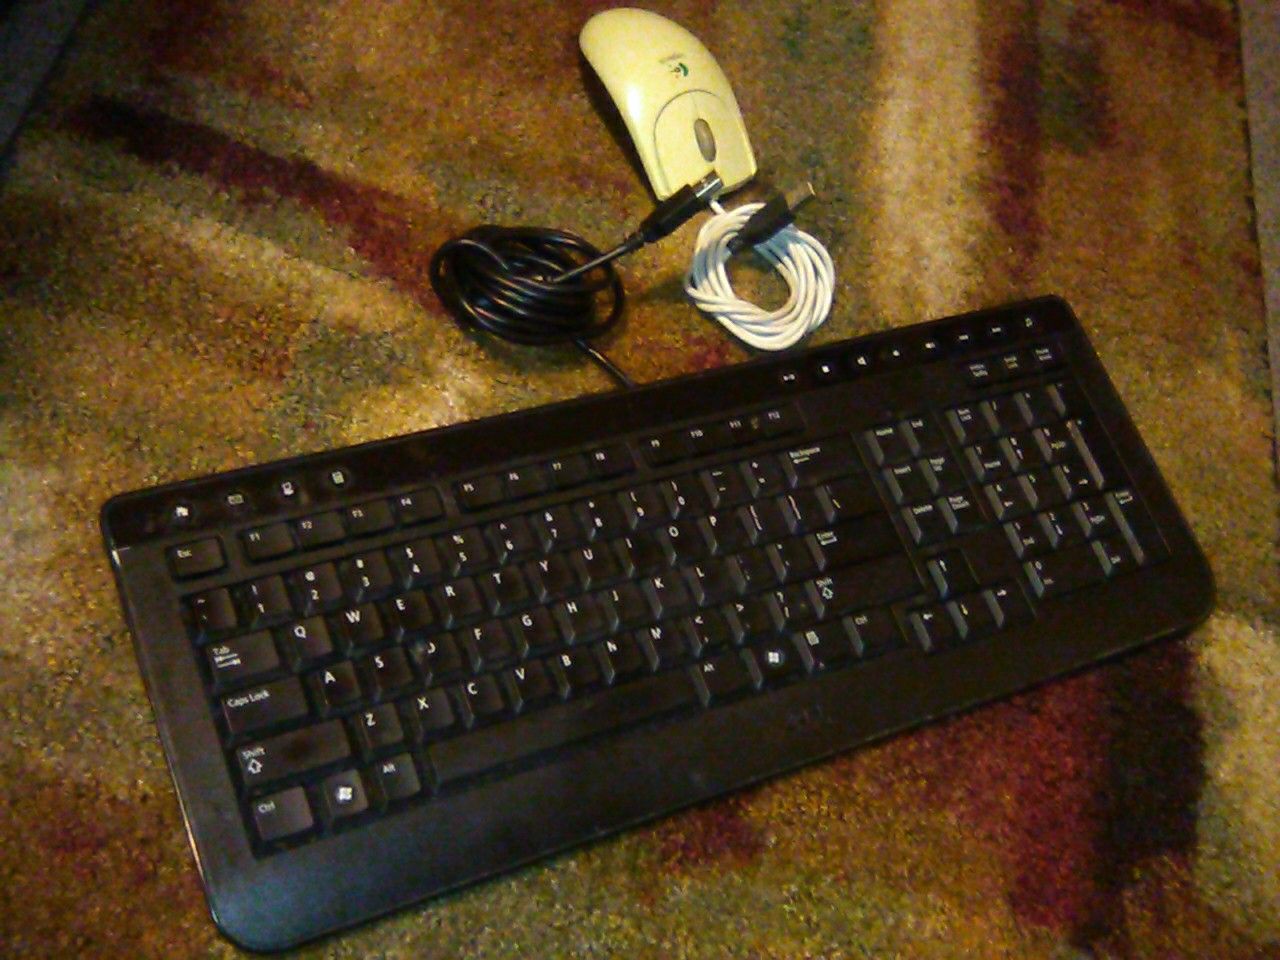 Dell keyboard Logitech mouse desktop pc mac computer accessories hardware, Make an offer